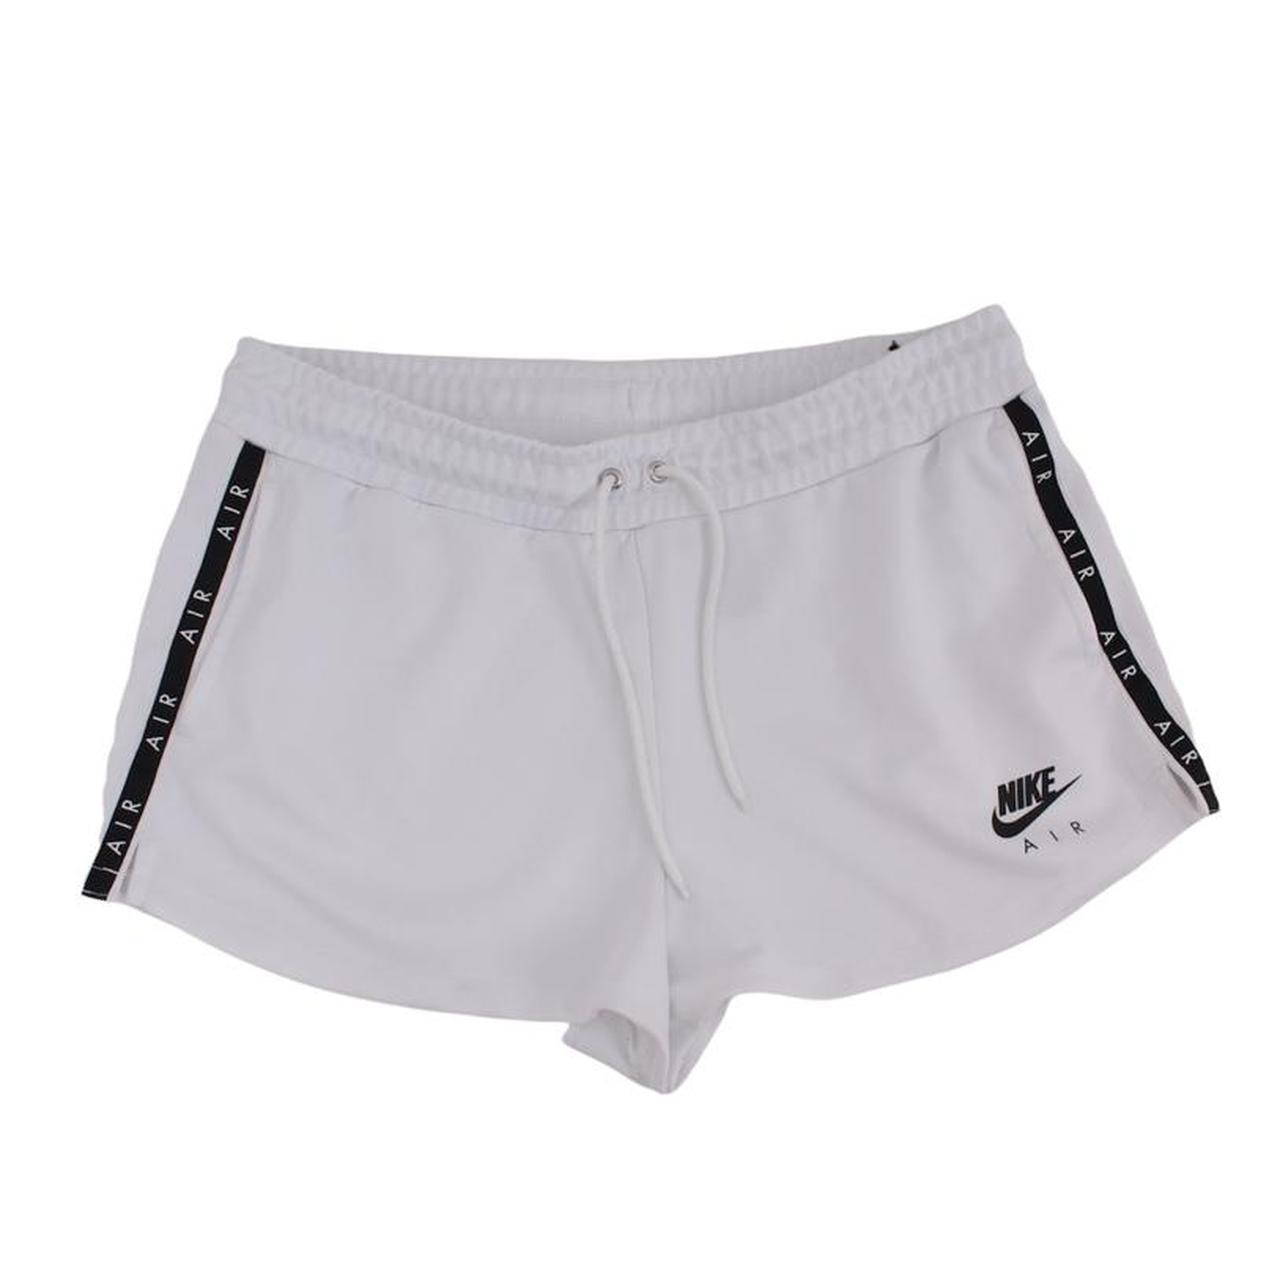 Nike air sprinter shorts Colour: white Size on... - Depop